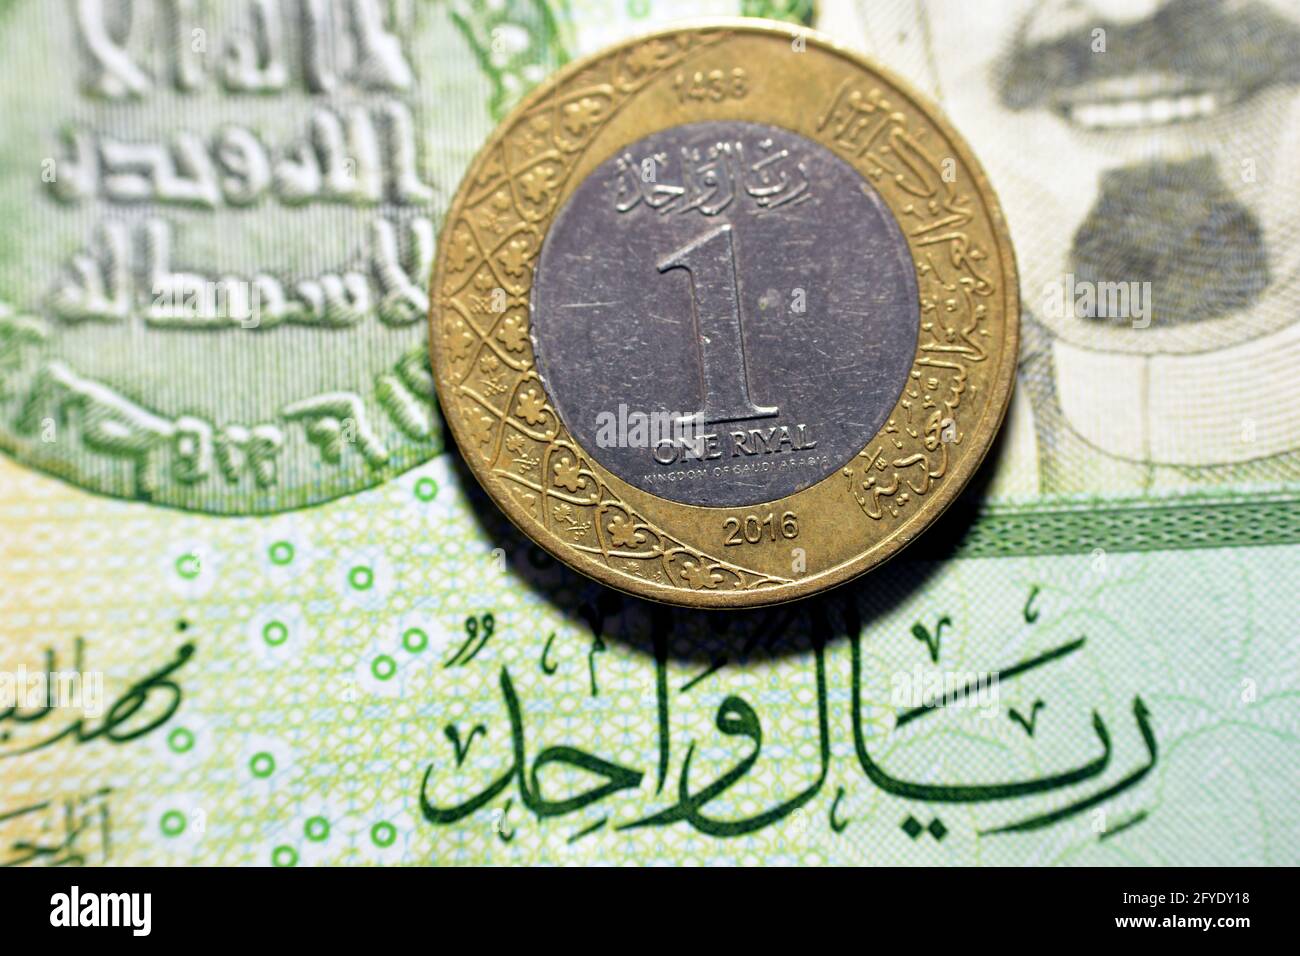 Una moneta riyal dell'Arabia Saudita (lato opposto) anno 2016 su 1 banconote di carta riyal Saudita di fondo, un metallo e una banconota riyals Saudita insieme, Saudita Foto Stock